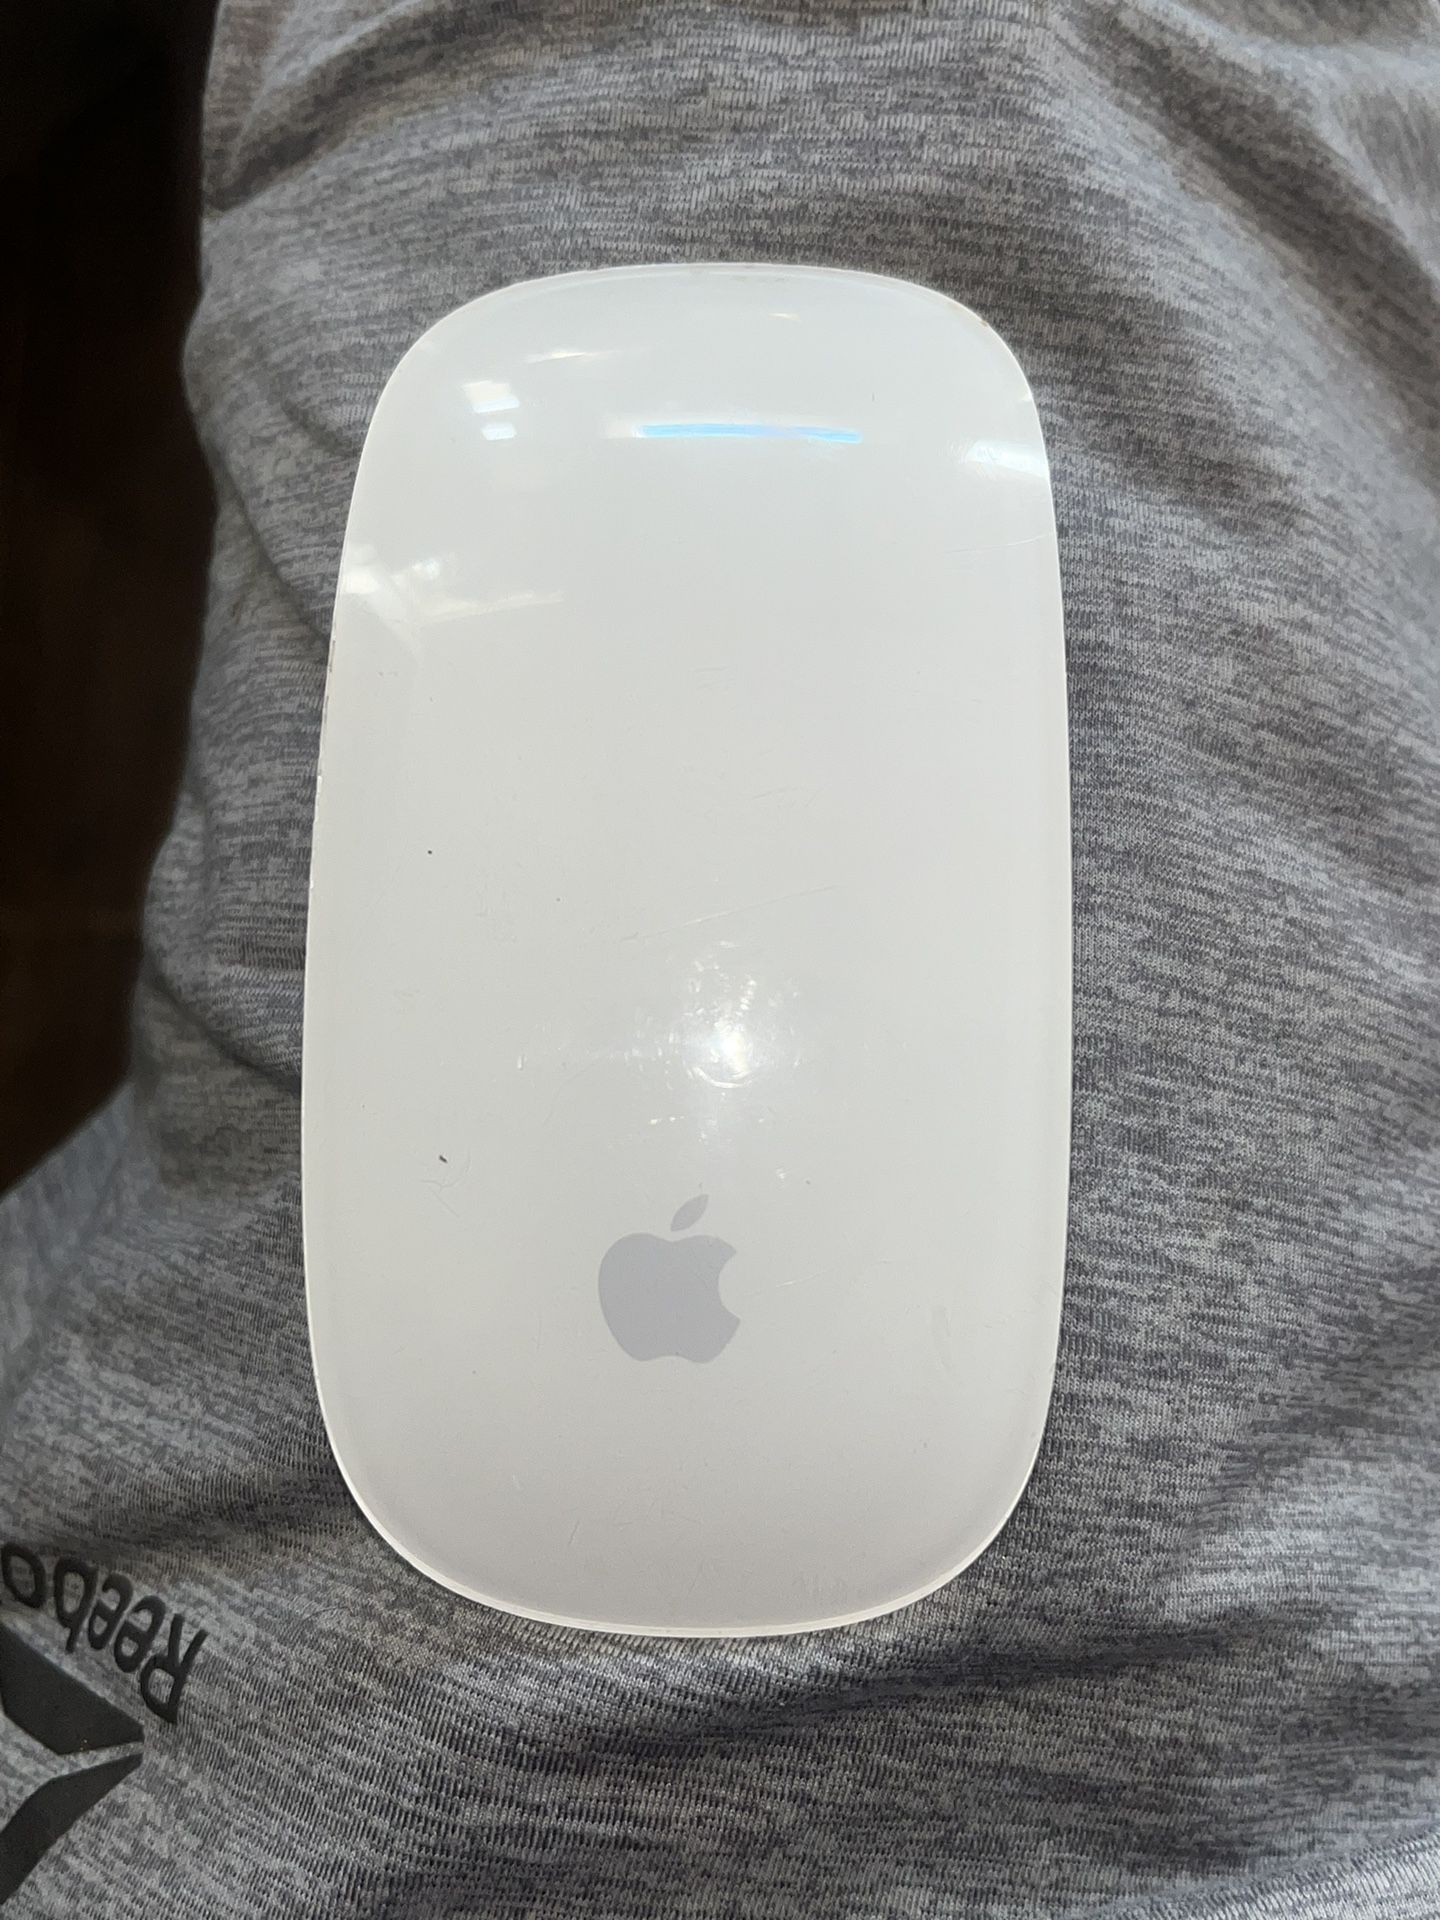 Apple Mouse (AA Batteries)